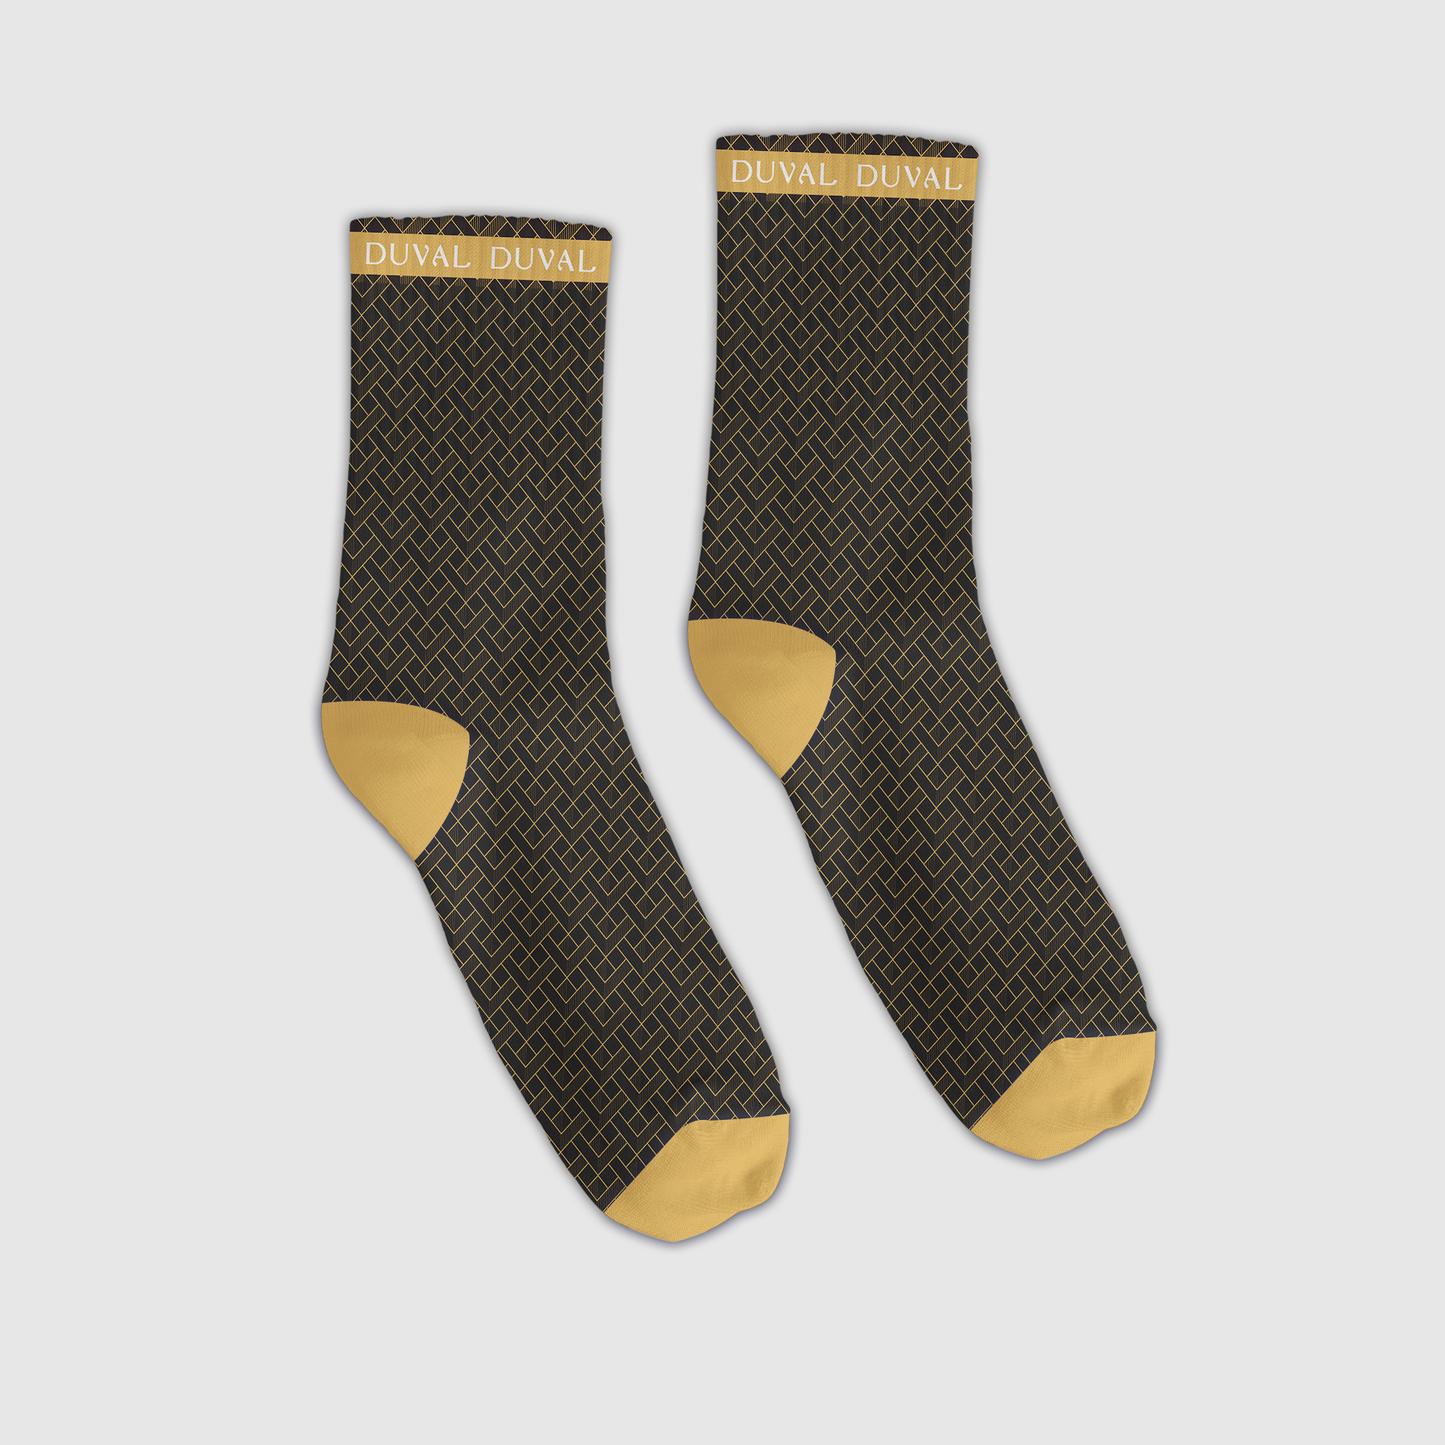 The Axton Socks